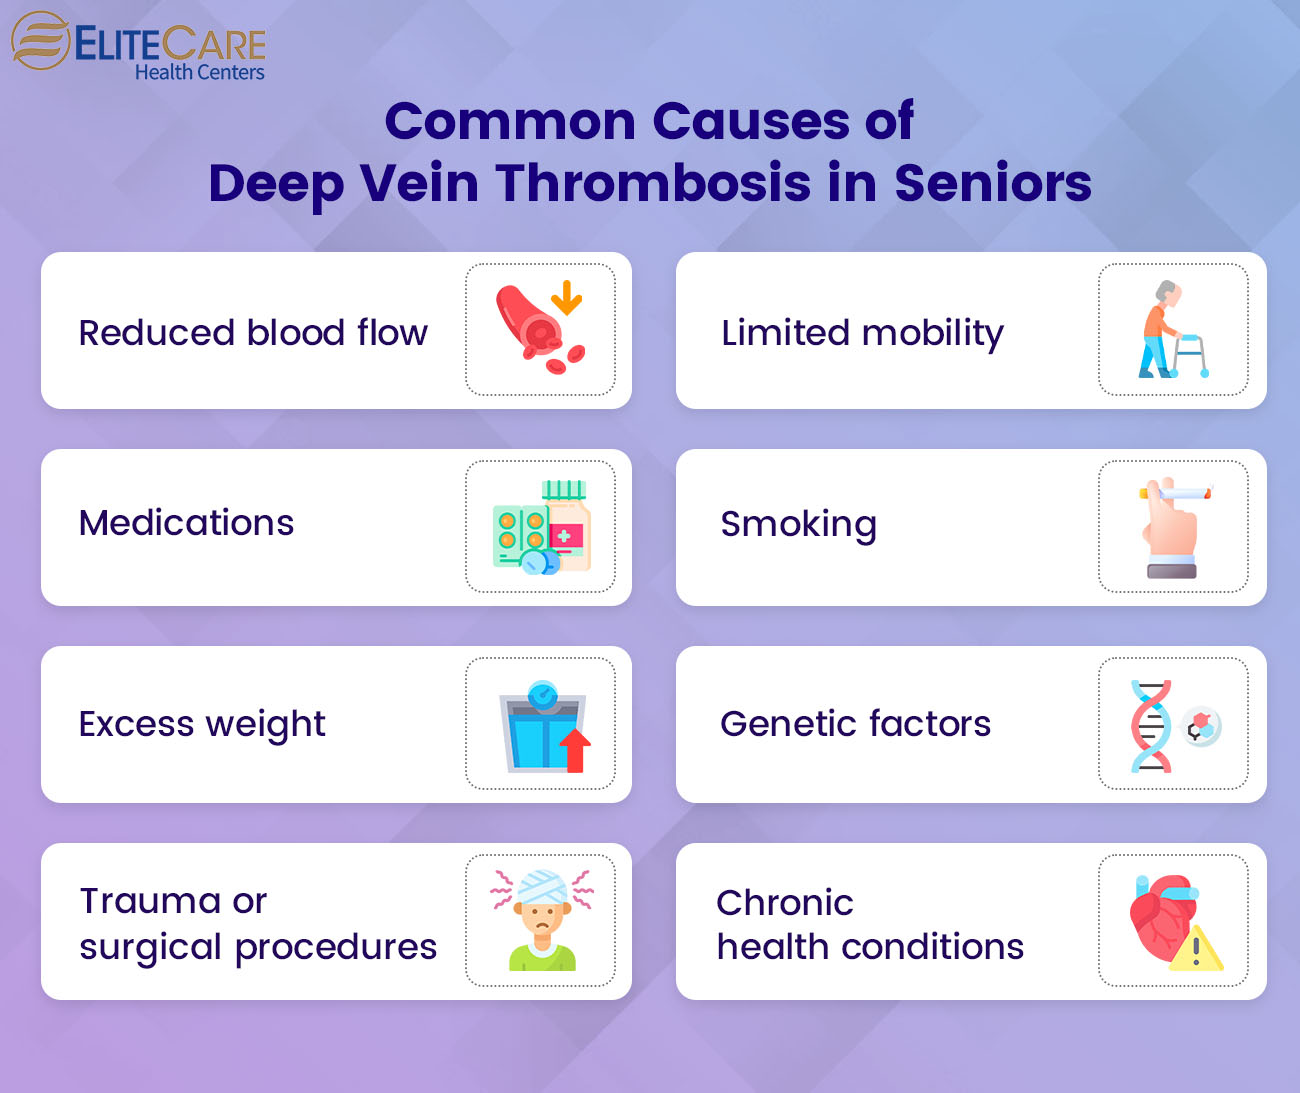 Common Causes of Deep Vein Thrombosis in Seniors